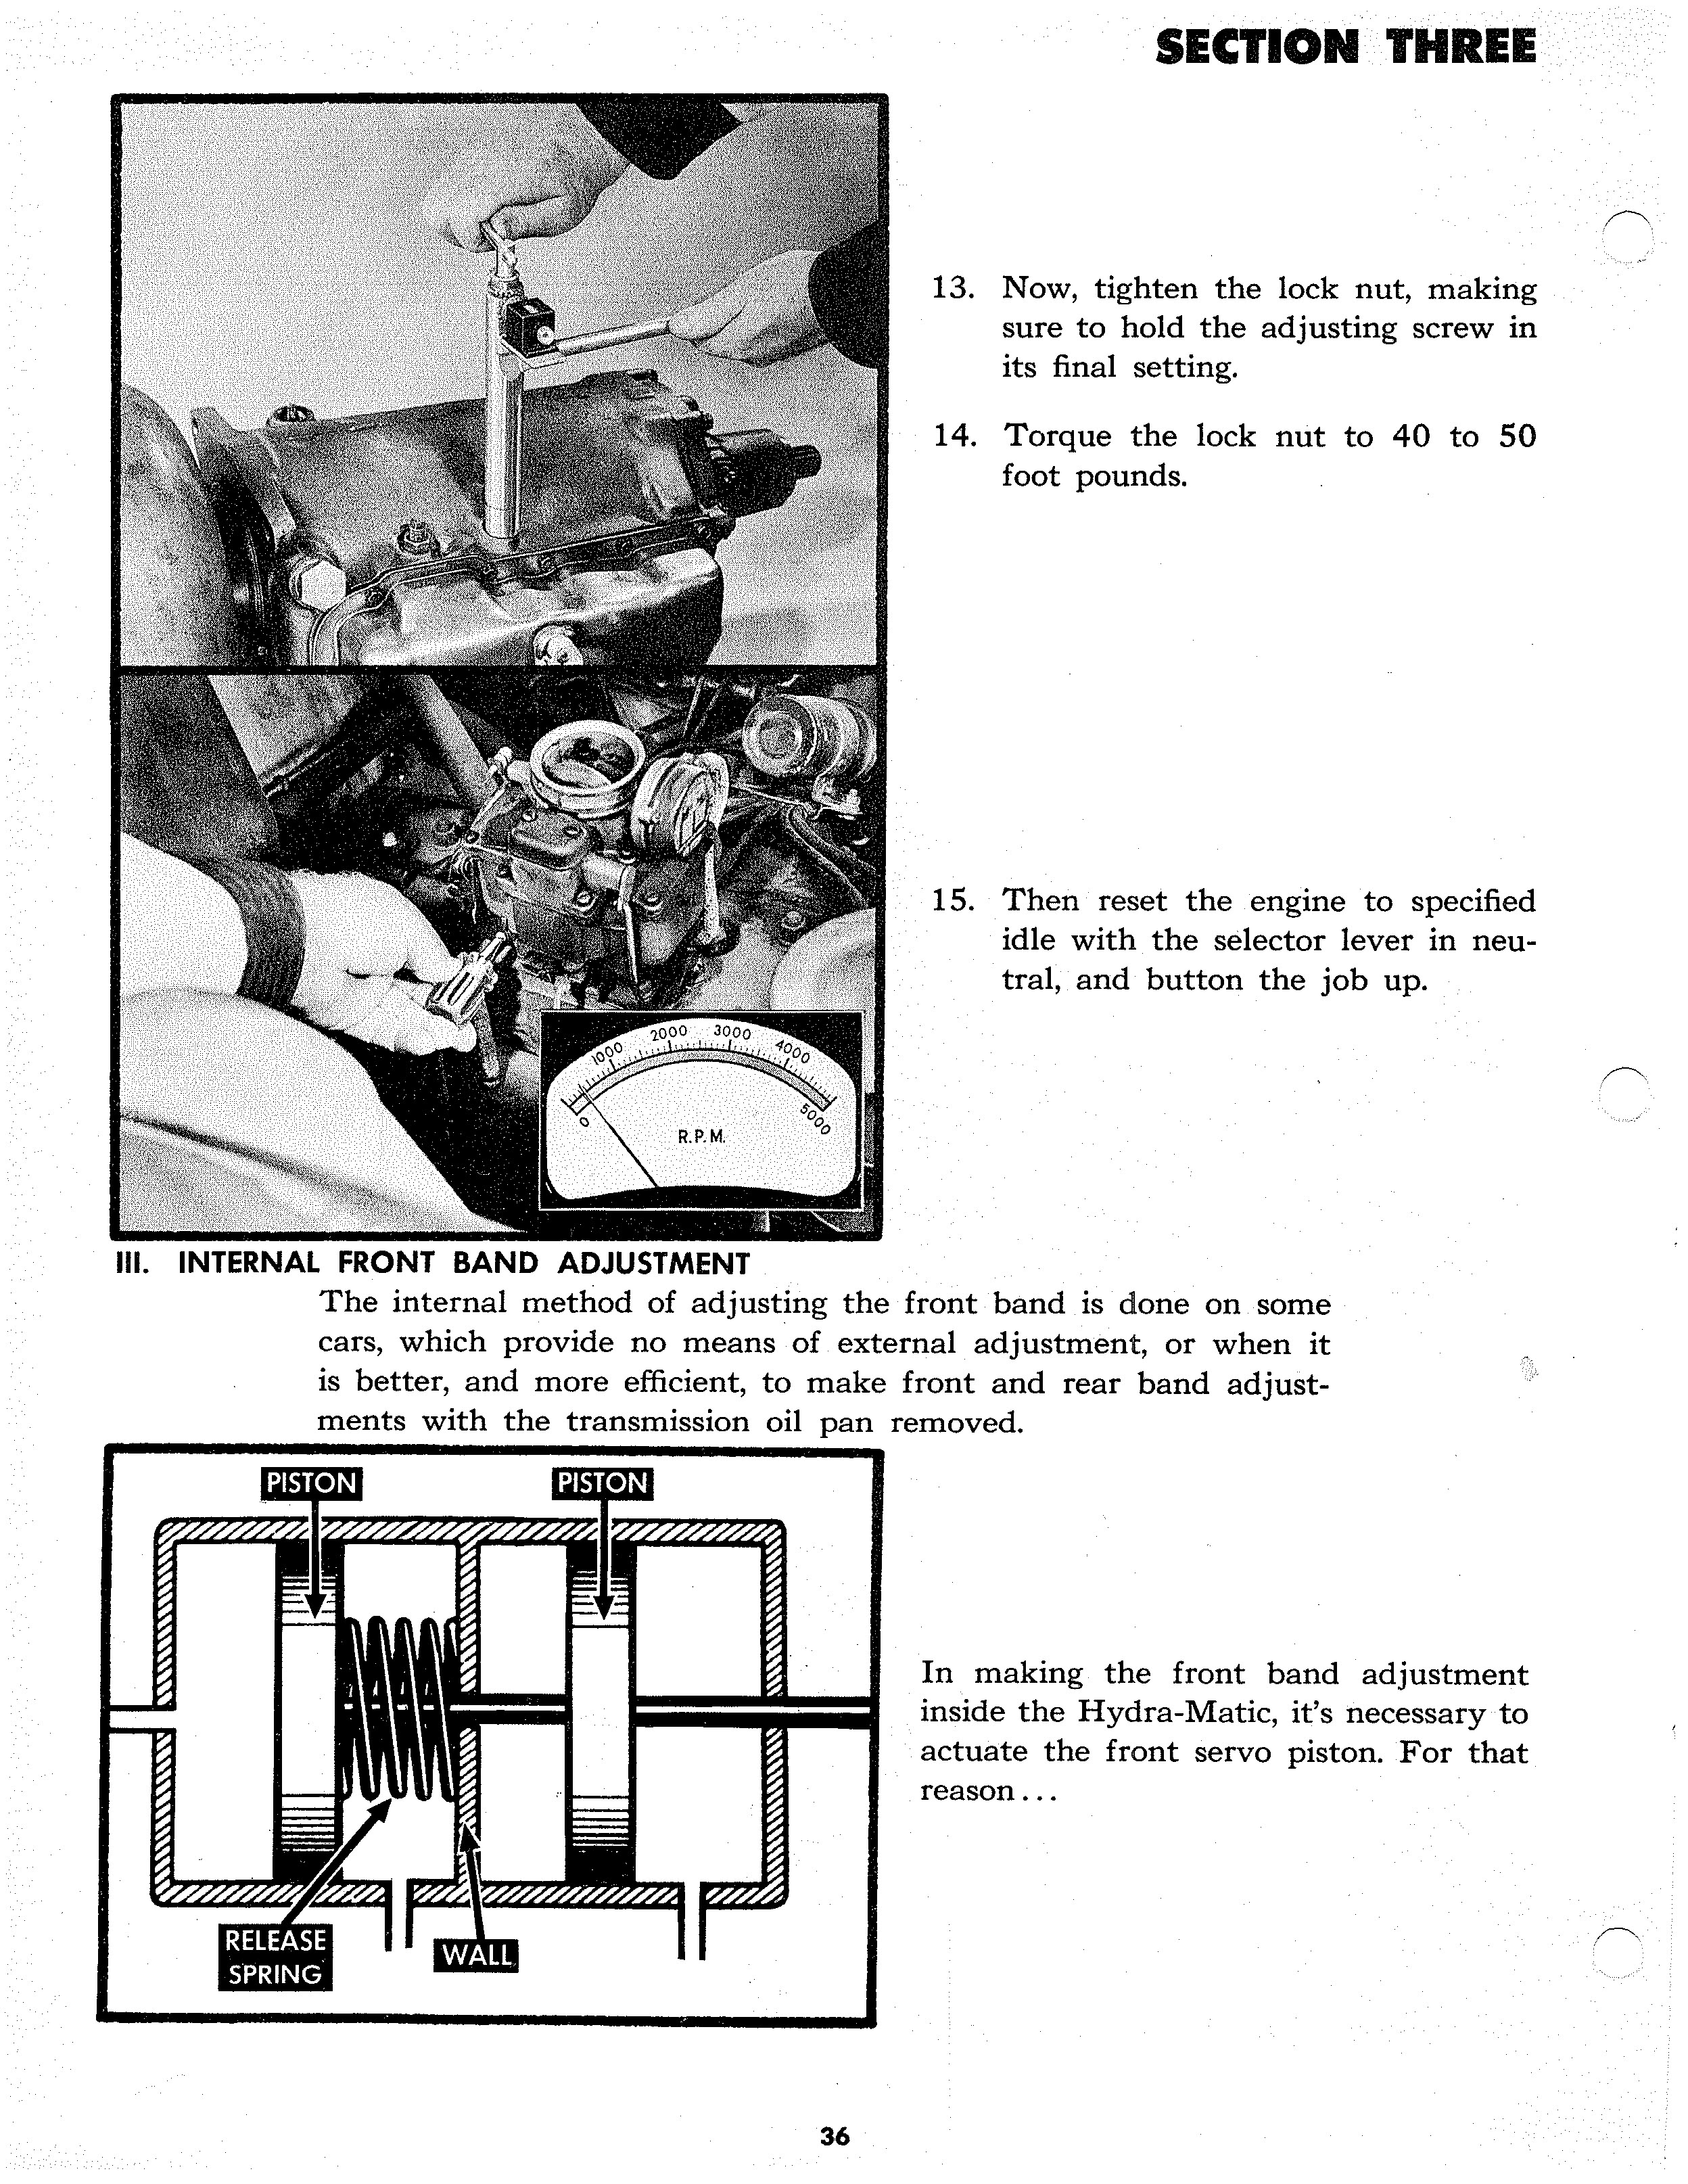 1947-1955 Hydramatic Transmission On-the-Car Adjustment Service Manual ...